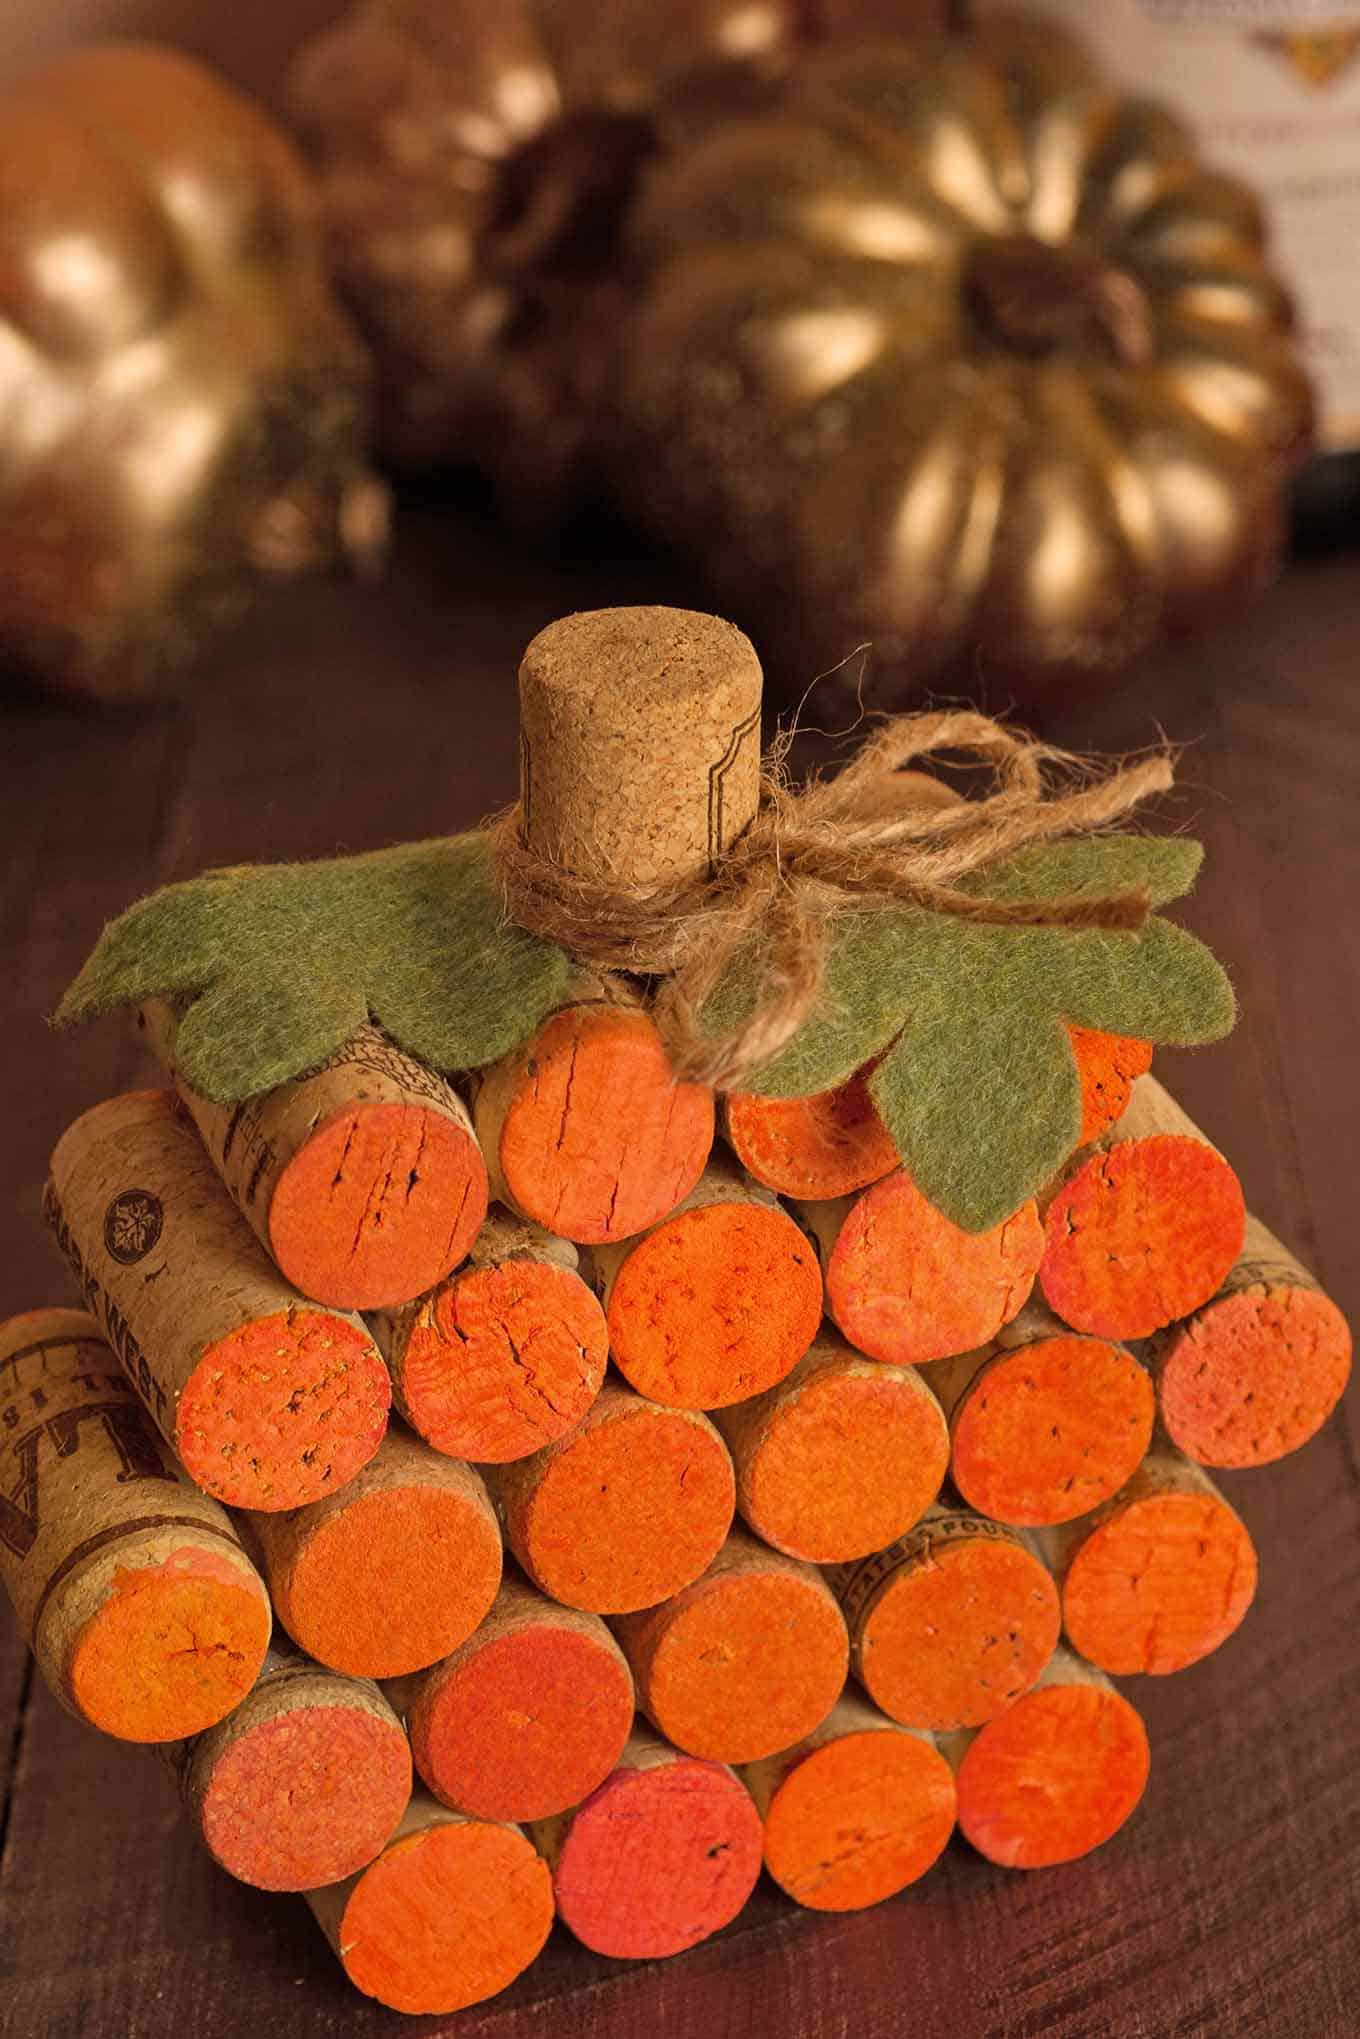 Craft Class for Adults: Make your Own Cork Pumpkins!